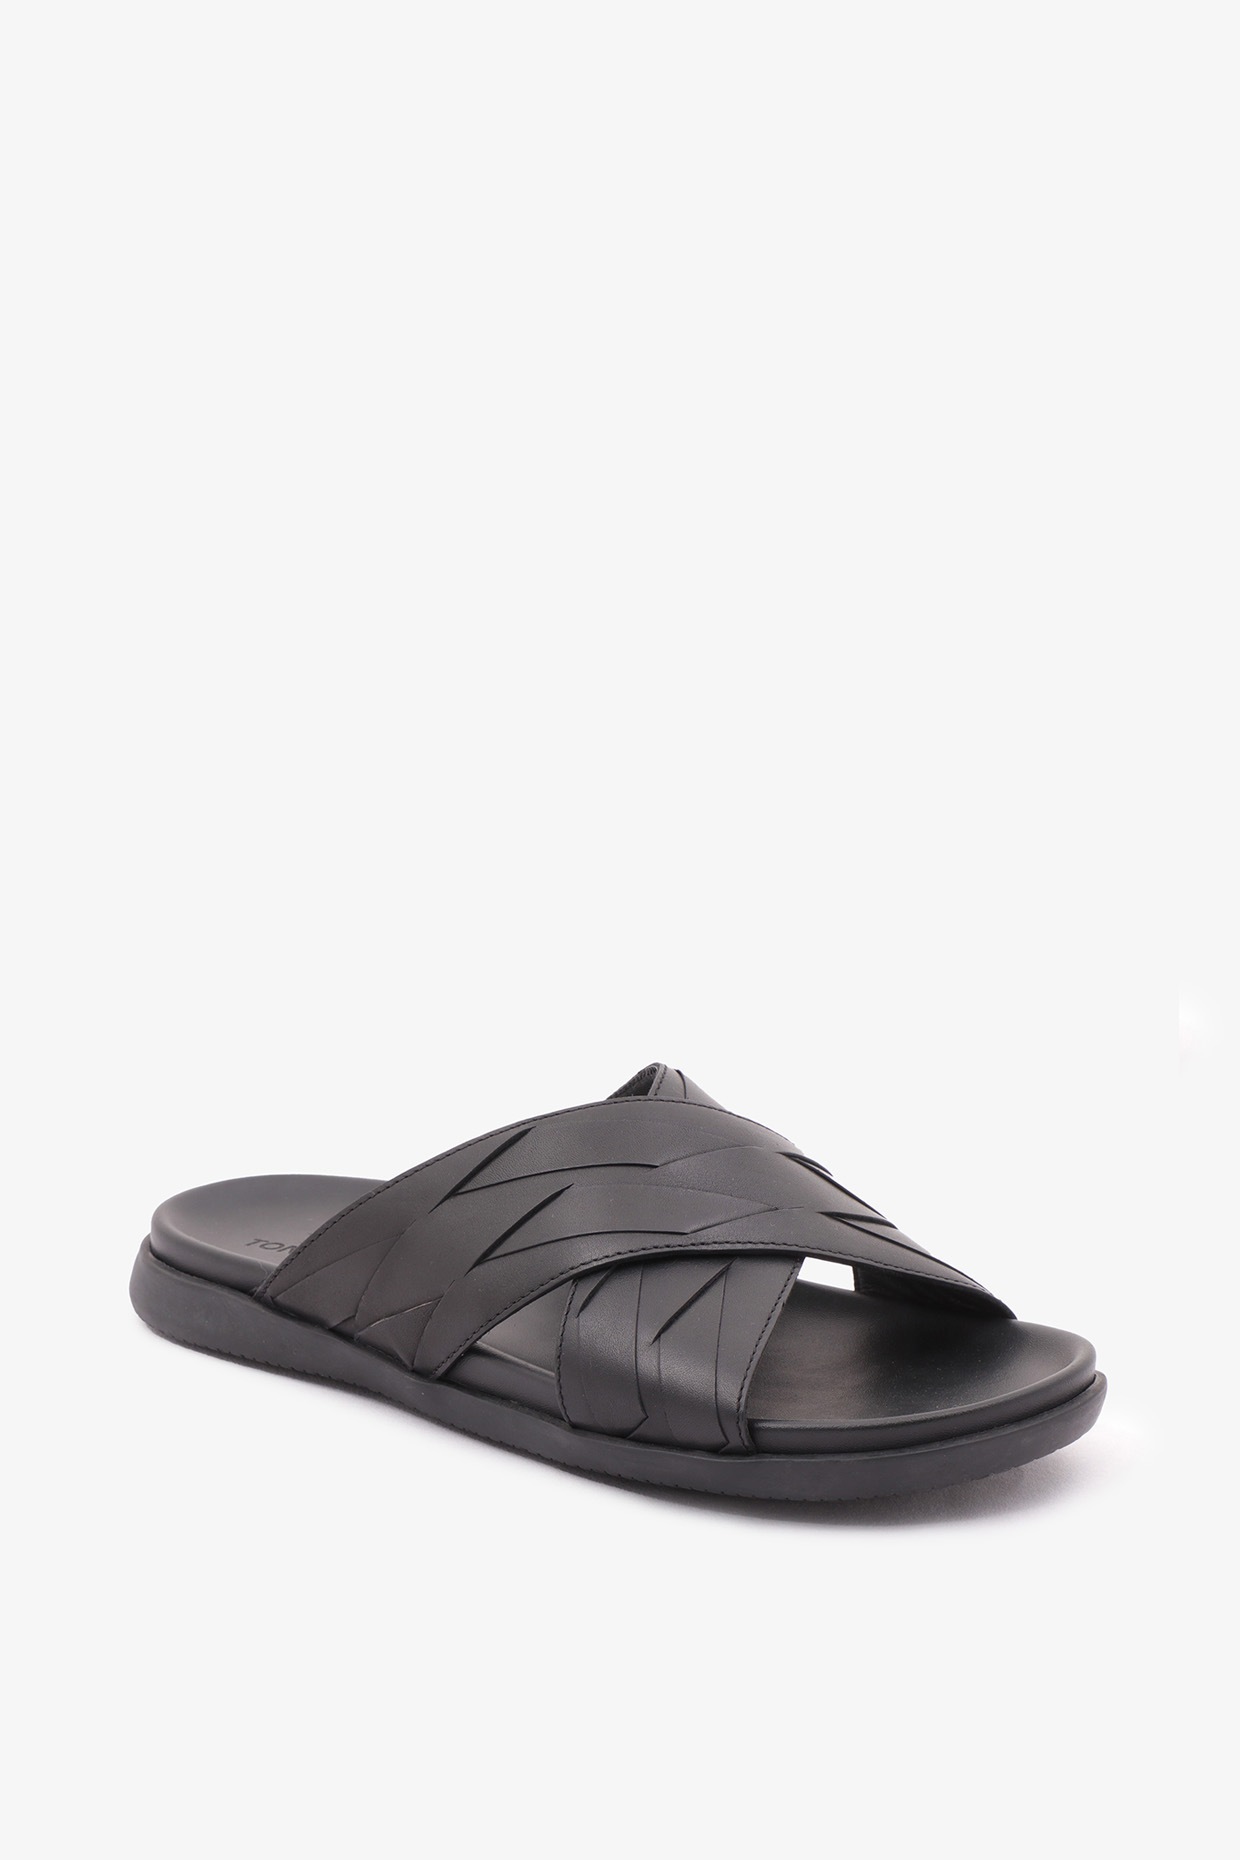 Men's Sandals - Leather & Closed-Toe Sandals | Clarks US